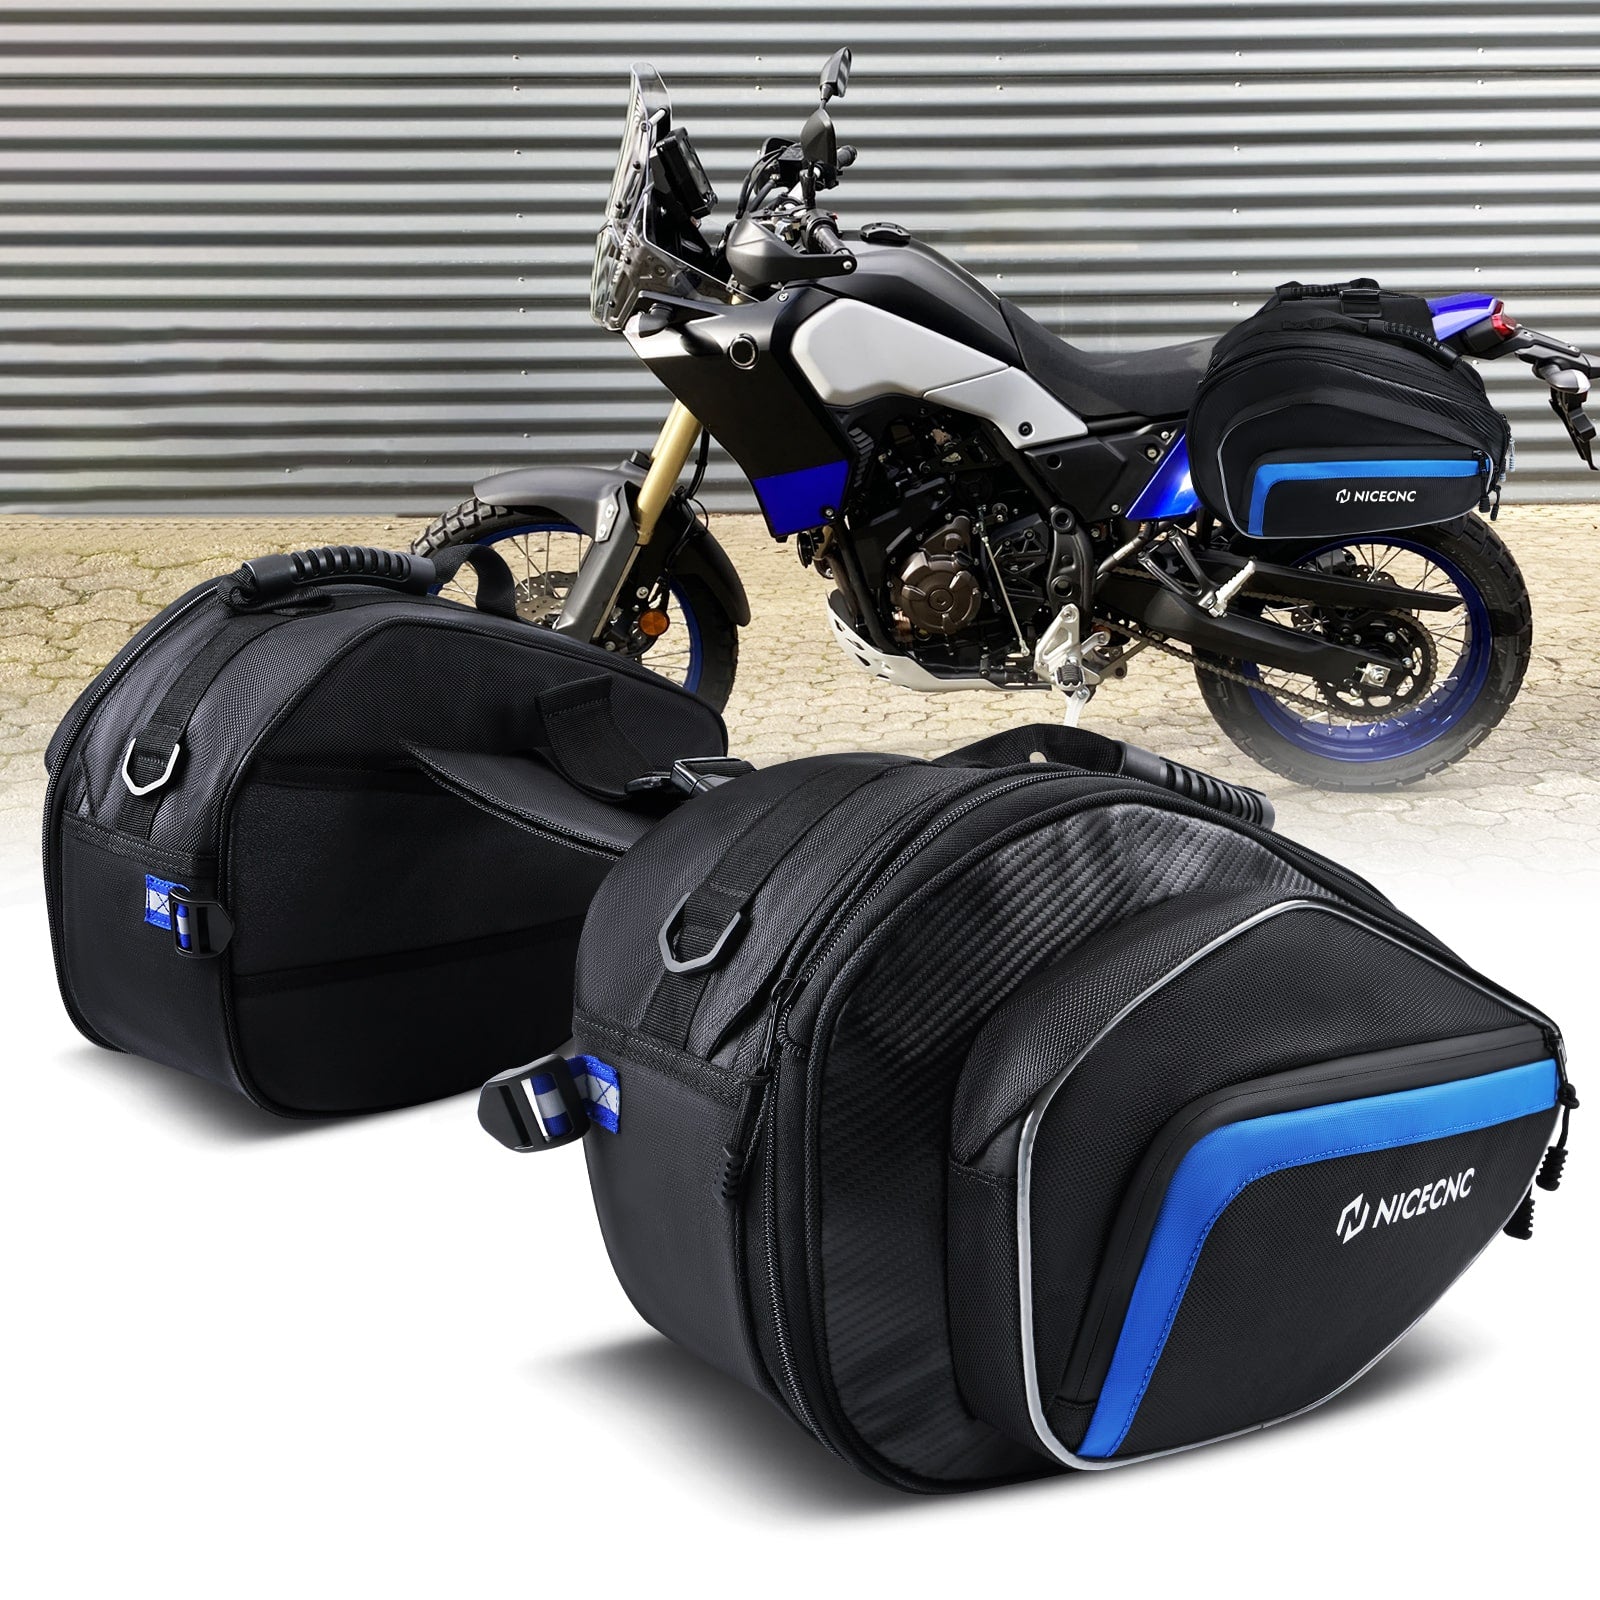 Universal Pair Motorcycle Saddle bags 50L Travel Tank Luggage Bag Quick Detach